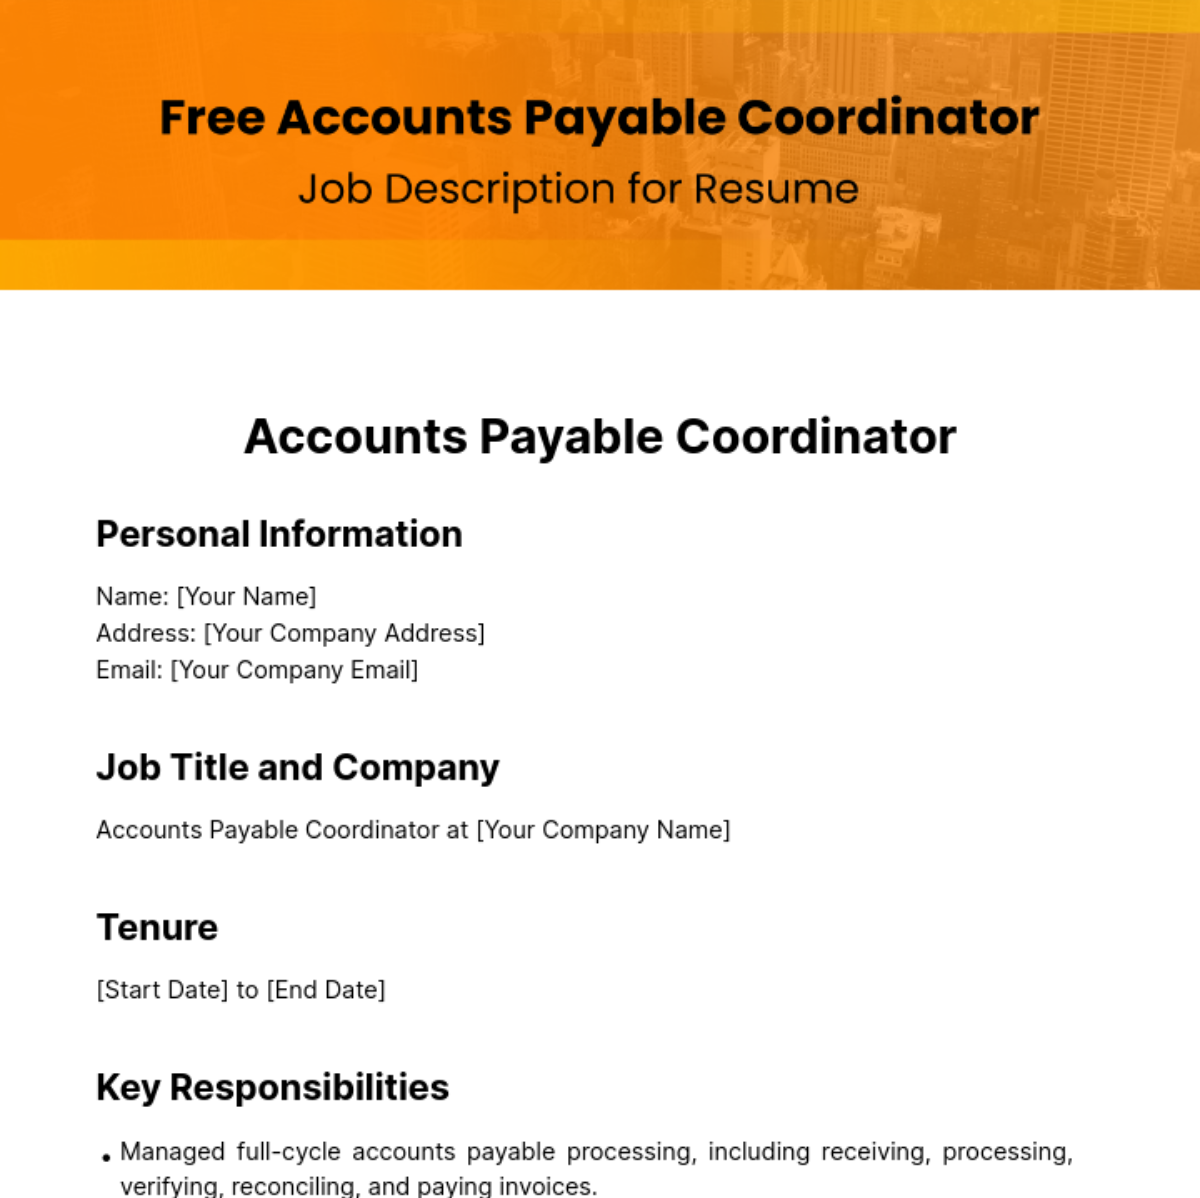 Accounts Payable Job Description for Resume Template